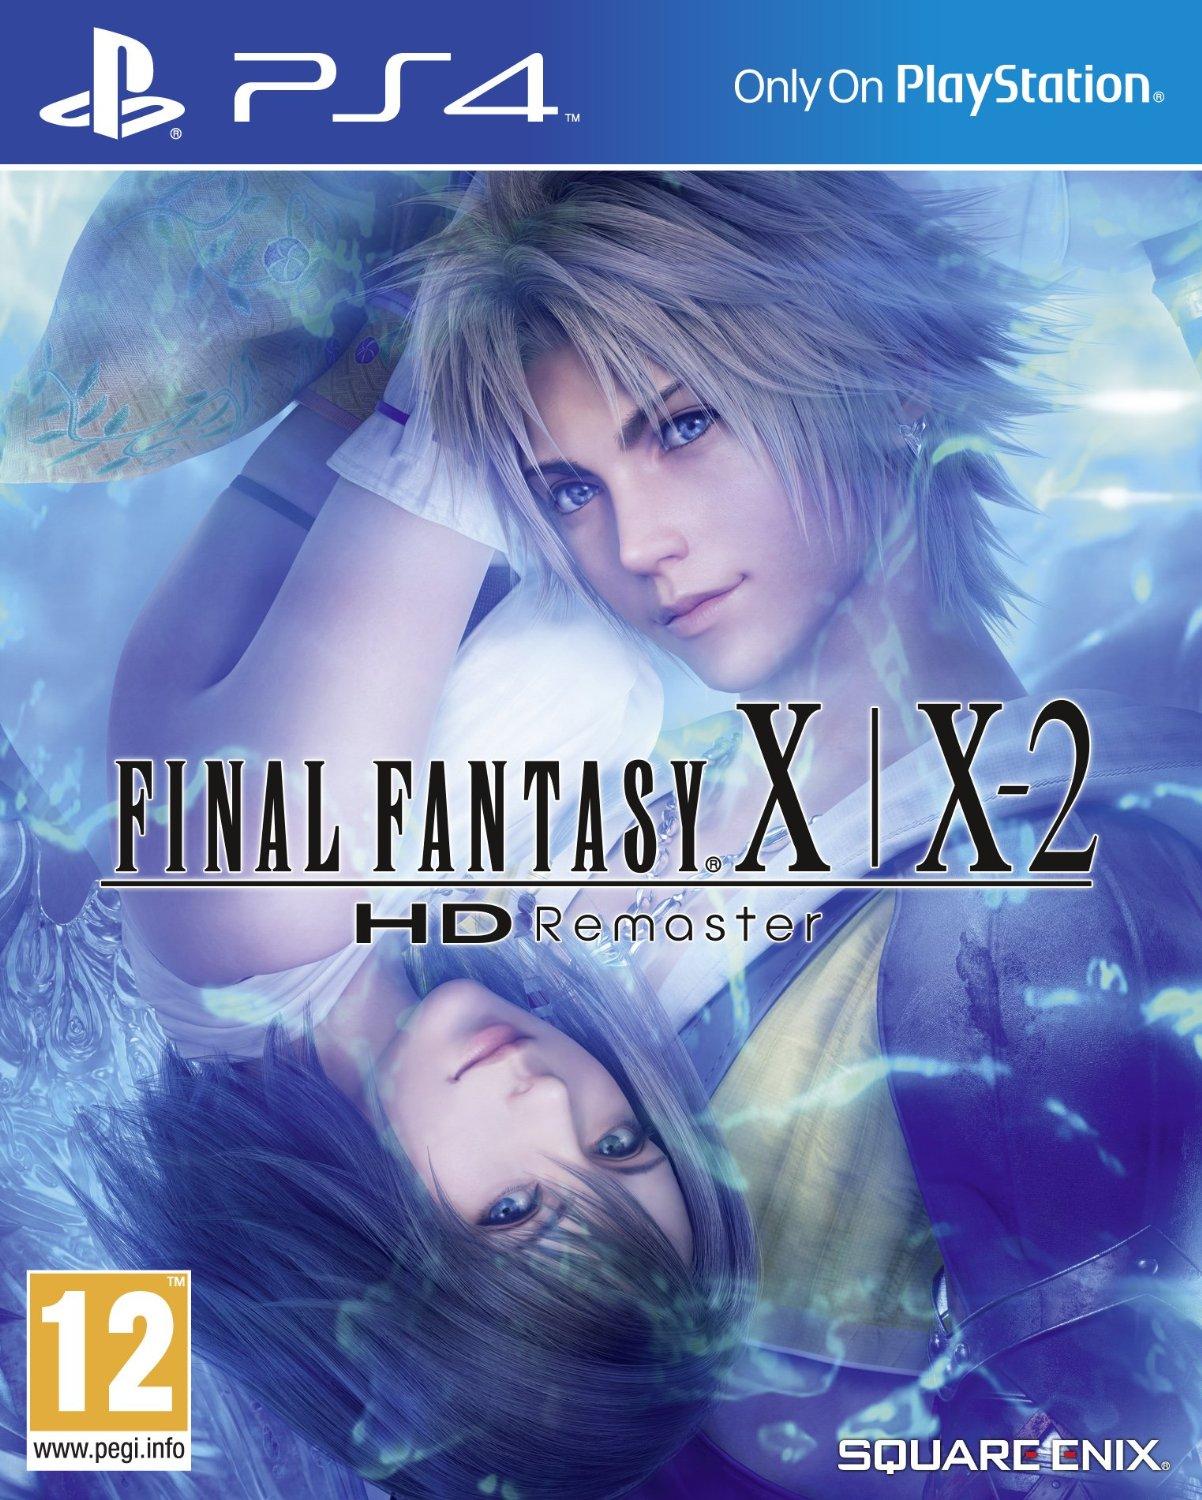 Final Fantasy X/X-2 HD Remaster /PS4